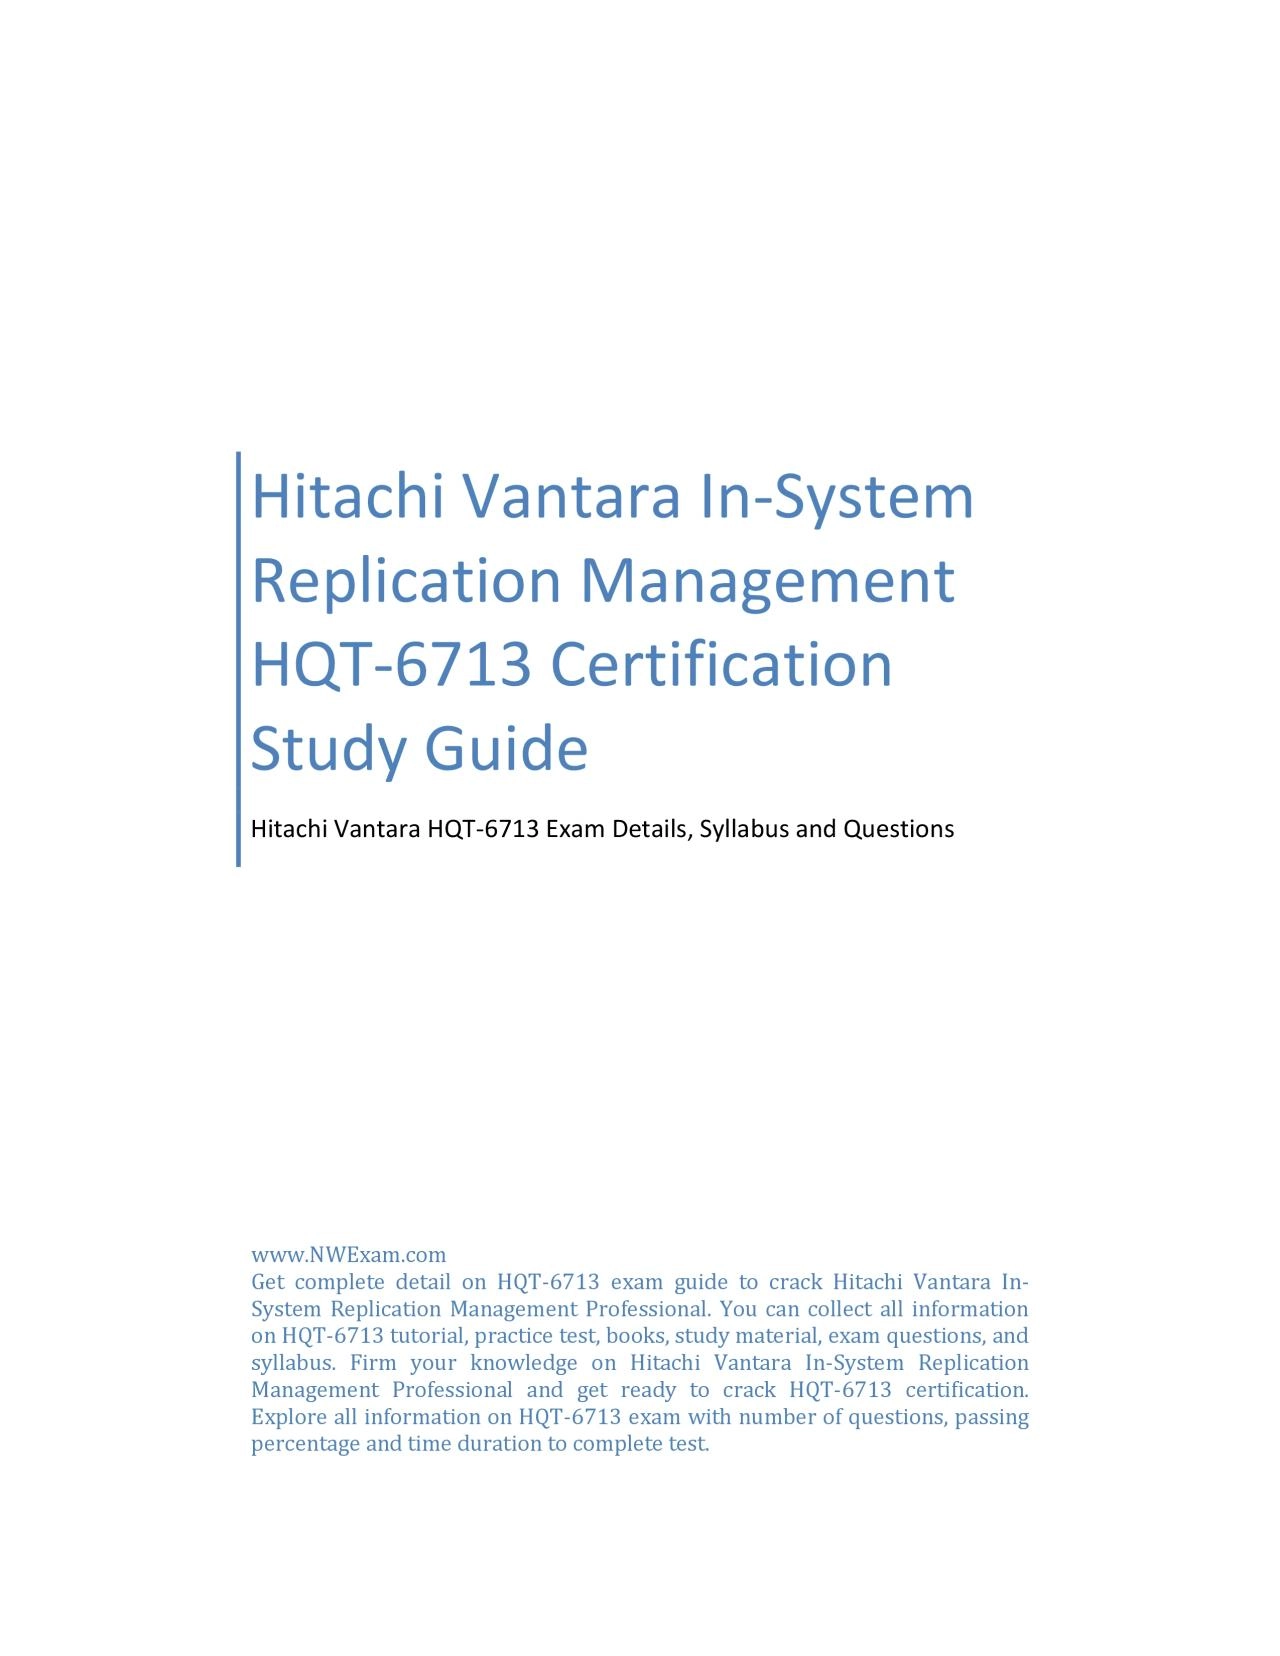 Hitachi Vantara In-System Replication Management HQT-6713 Certification Study Guide